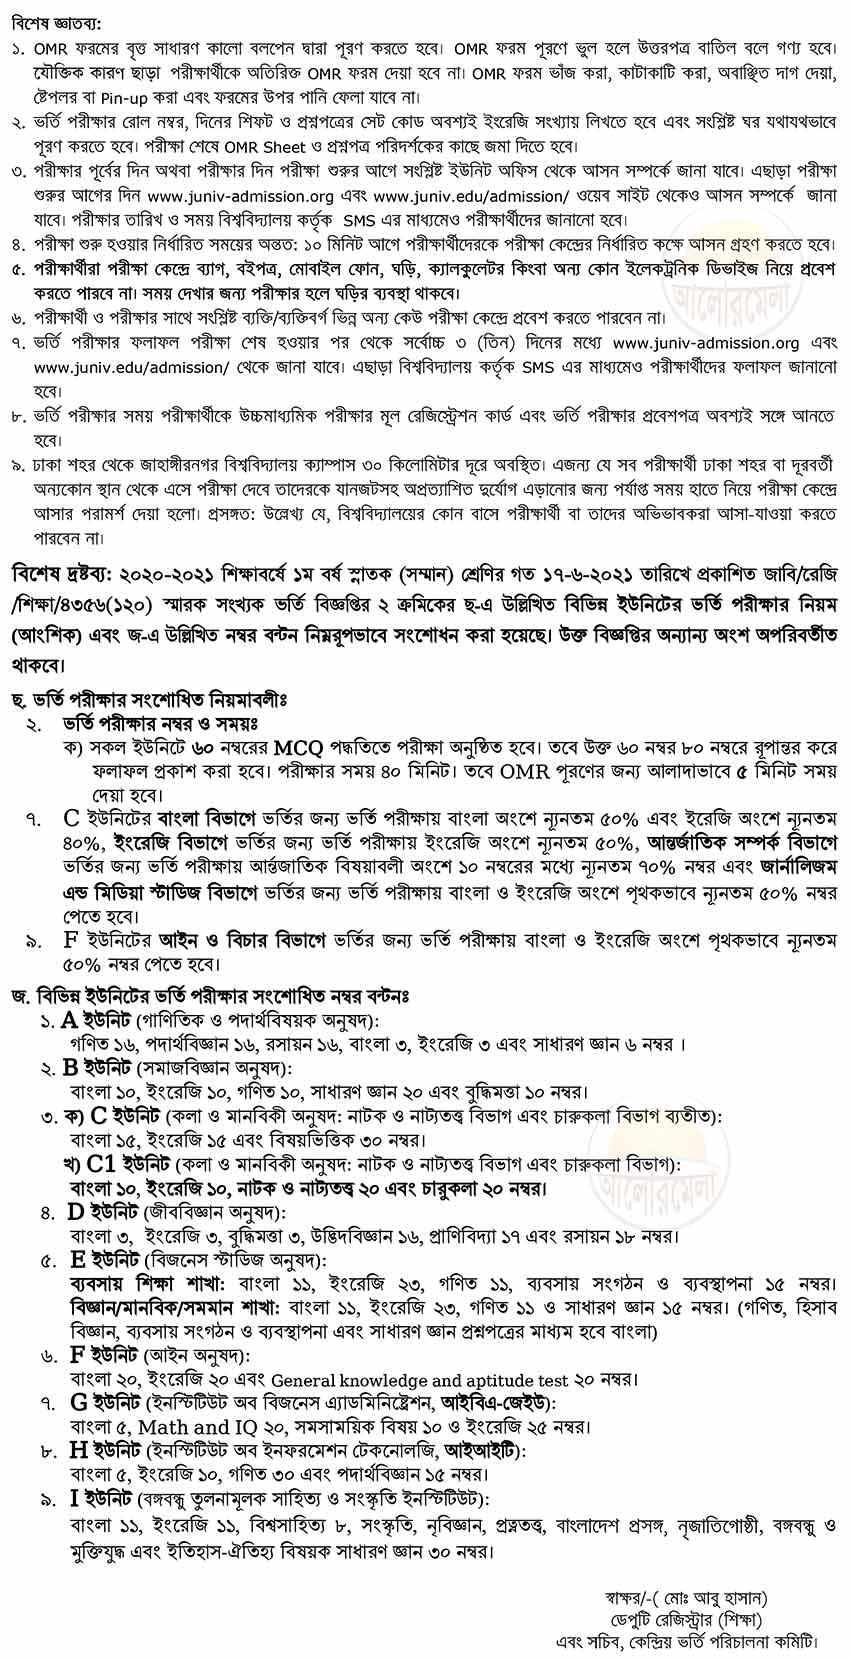 Jahangirnagar University JU Admission Test Schedule 2021 2